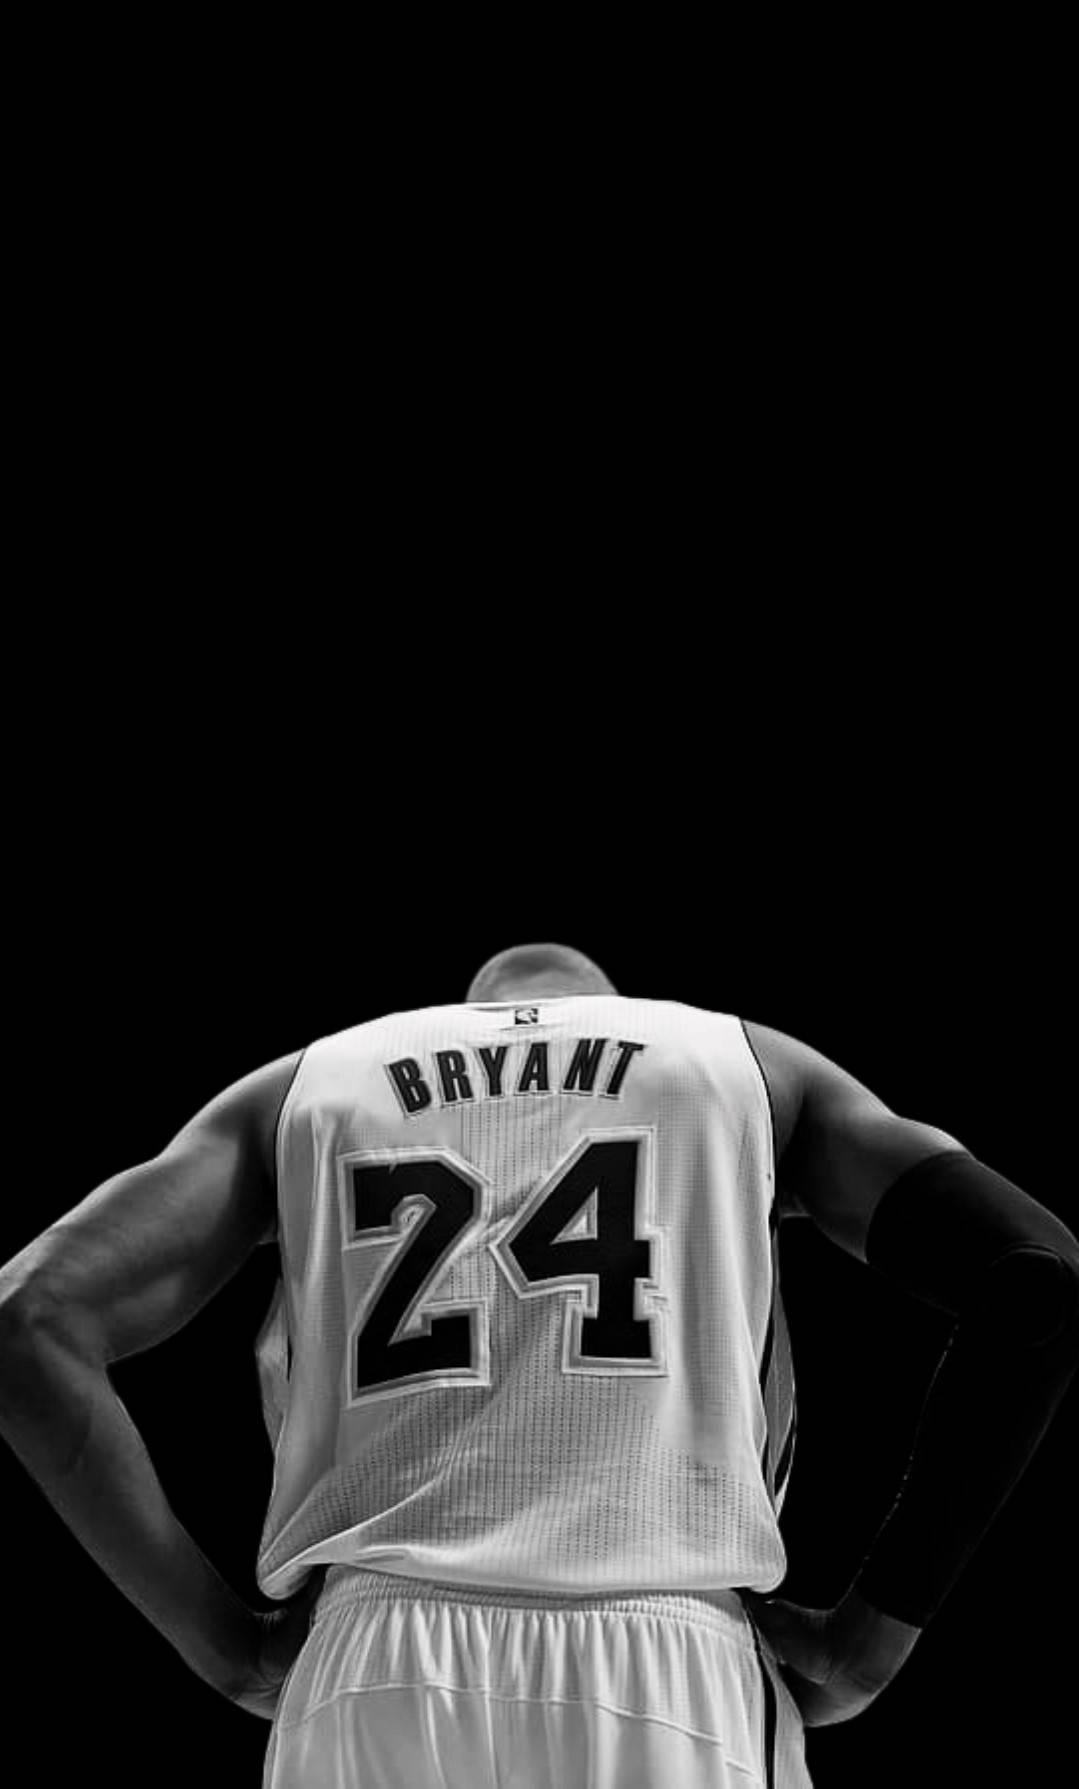 Aesthetic Kobe Bryant Jersey Taken From Behind Wallpaper